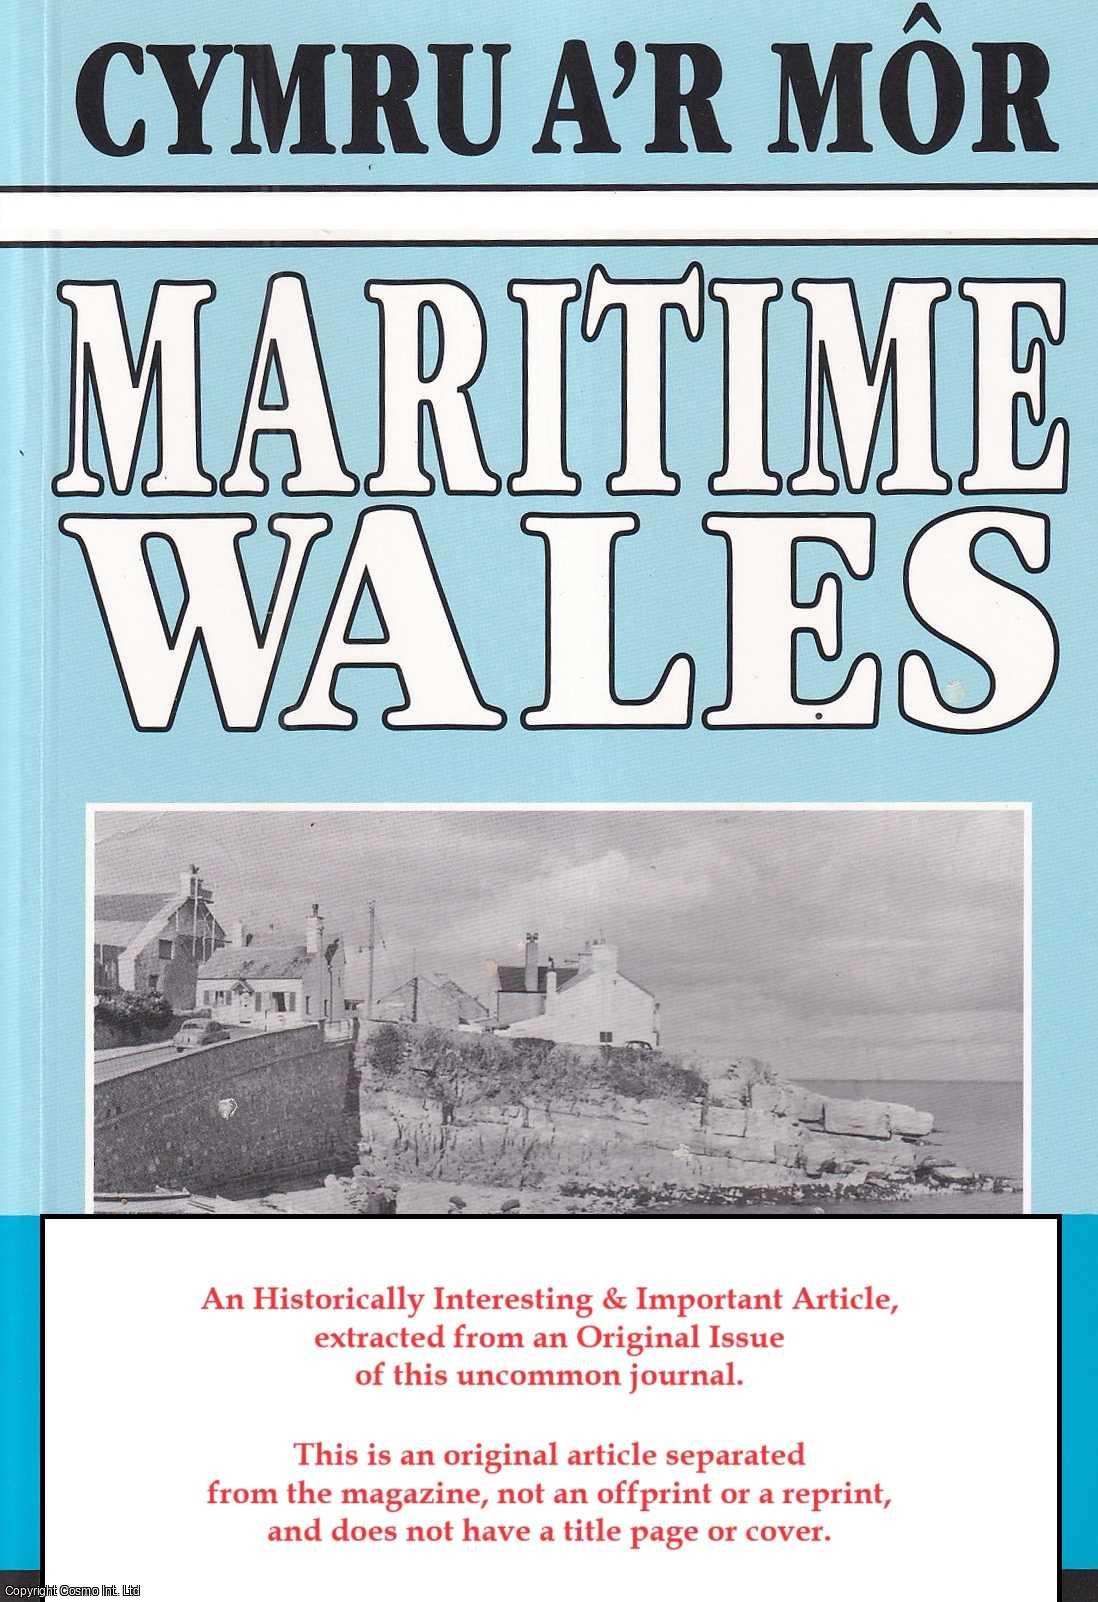 Captain Gwyn D. Pari Huws - Tramwyo Traeth Lafan. An original article from Maritime Wales, 1999.